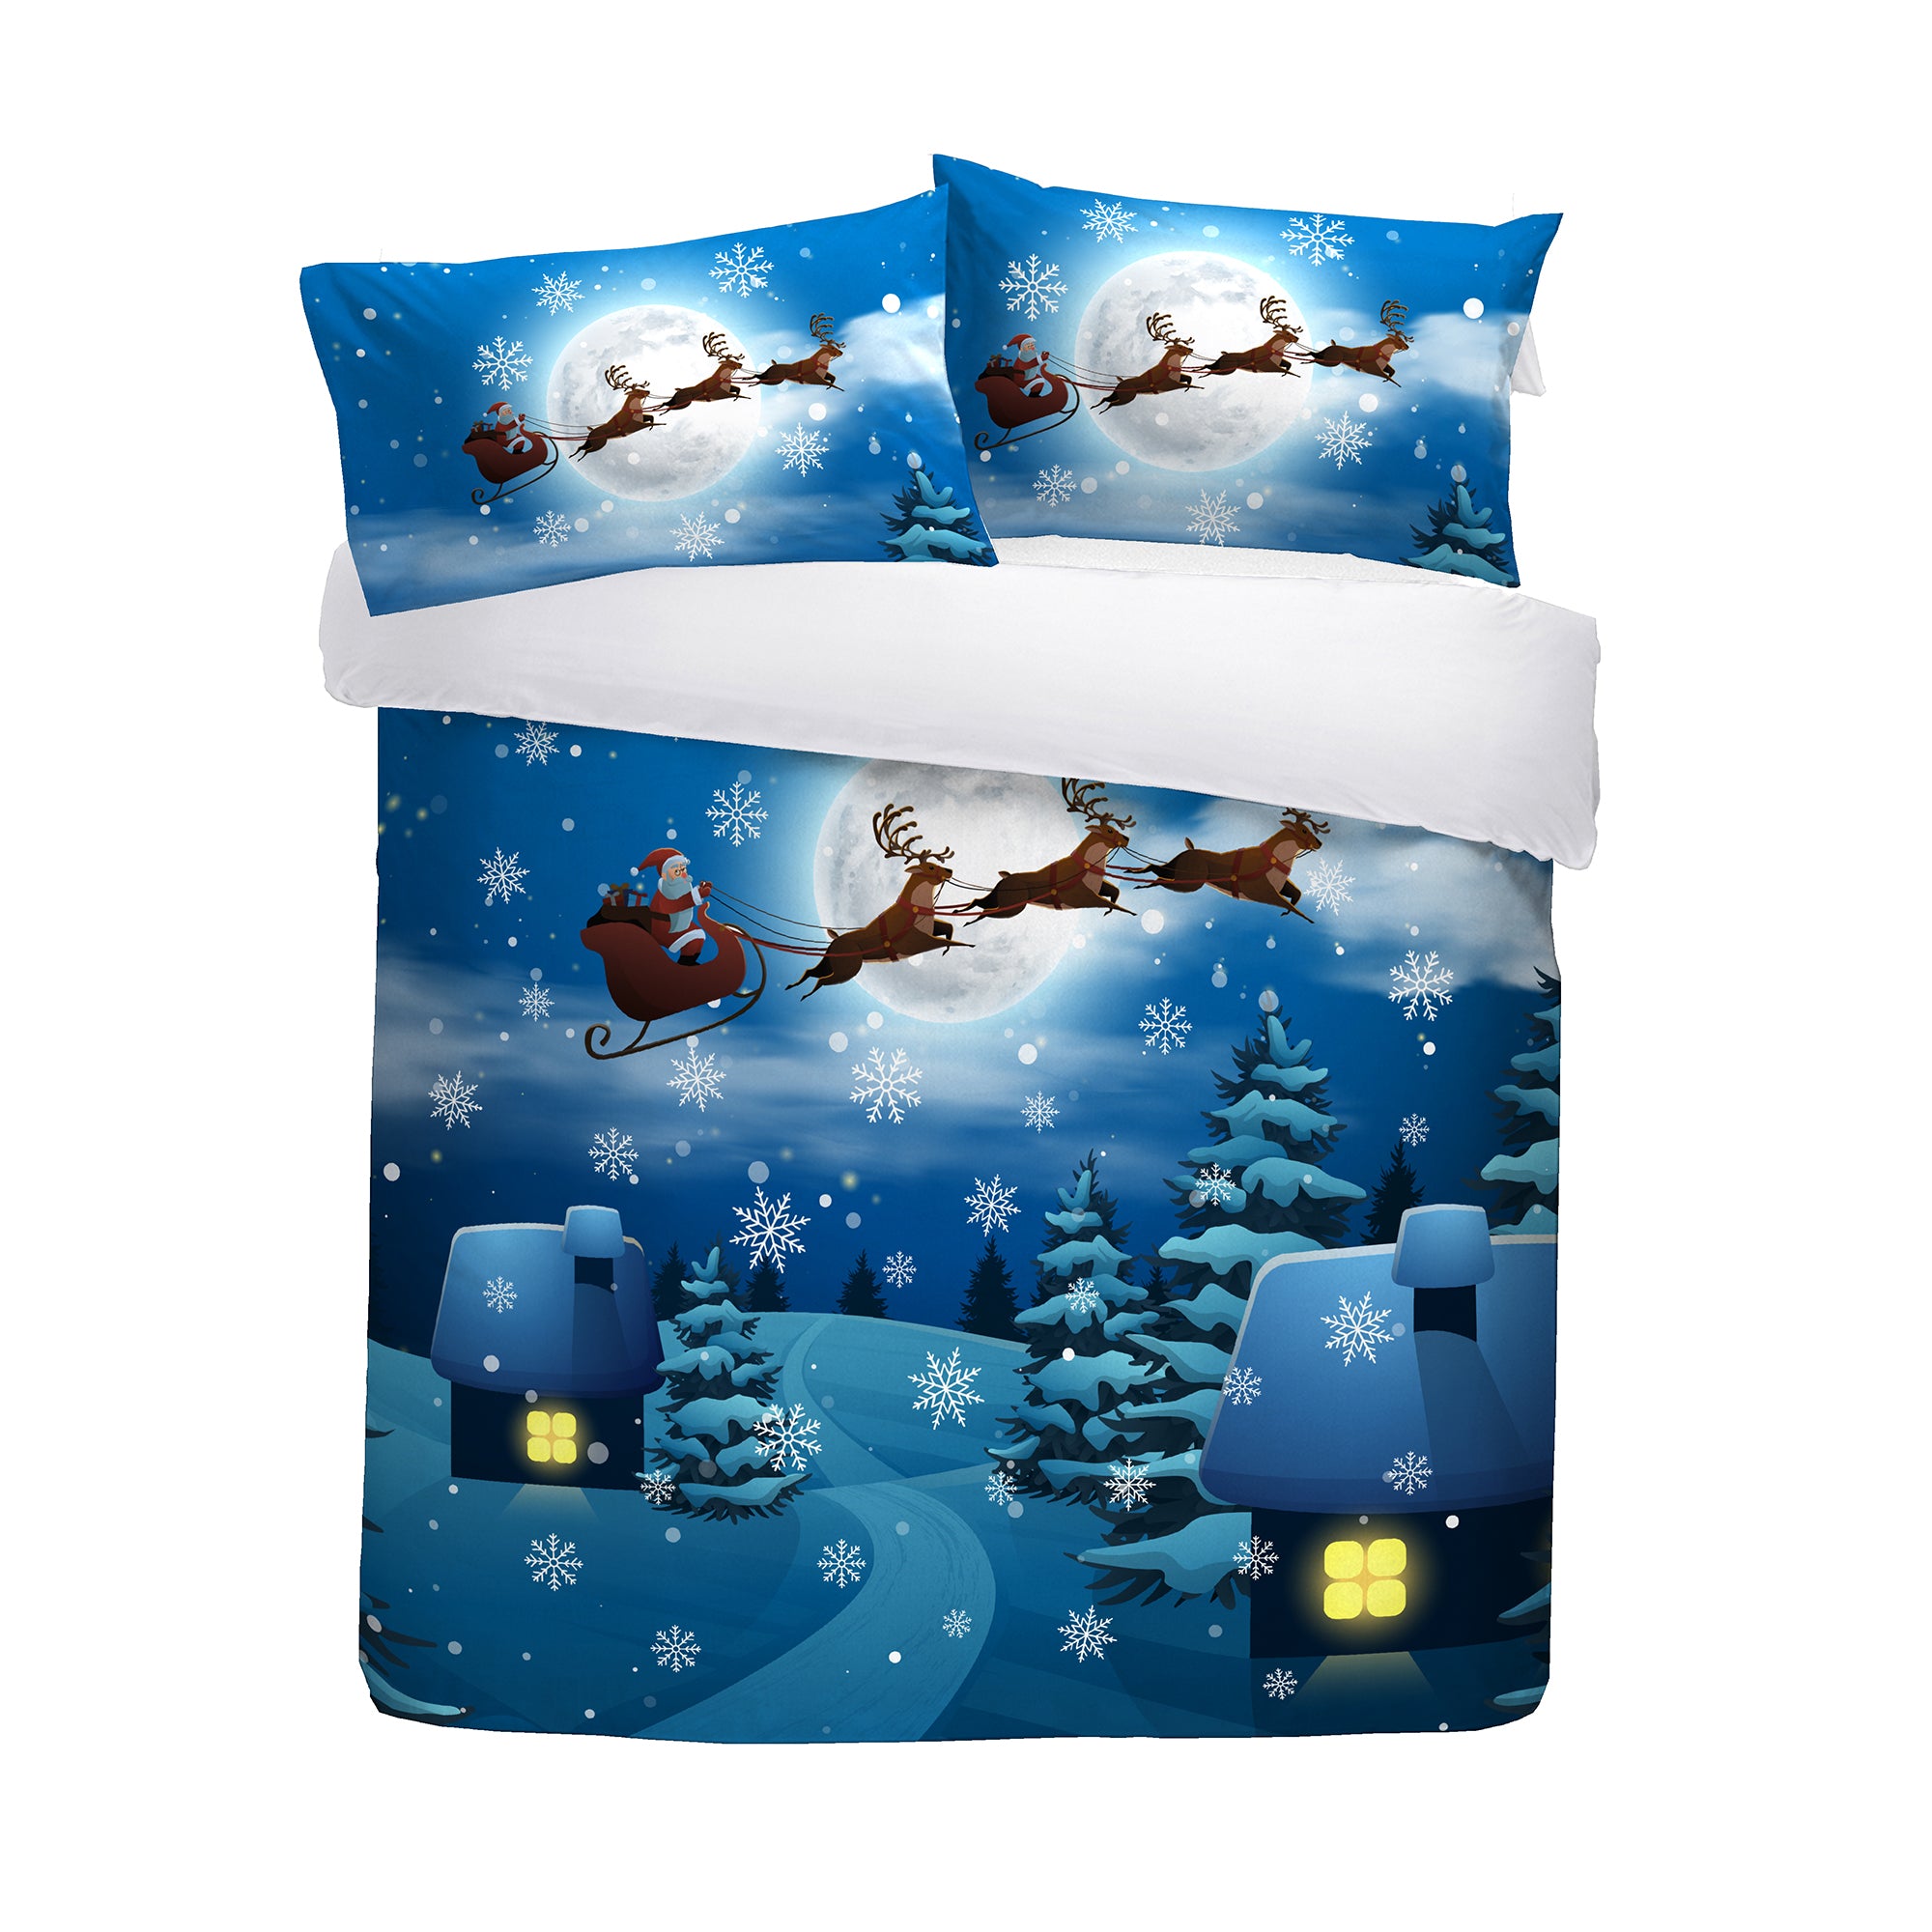 Santa Glow In The Dark - Christmas Duvet Cover Set - By Bedlam Christmas